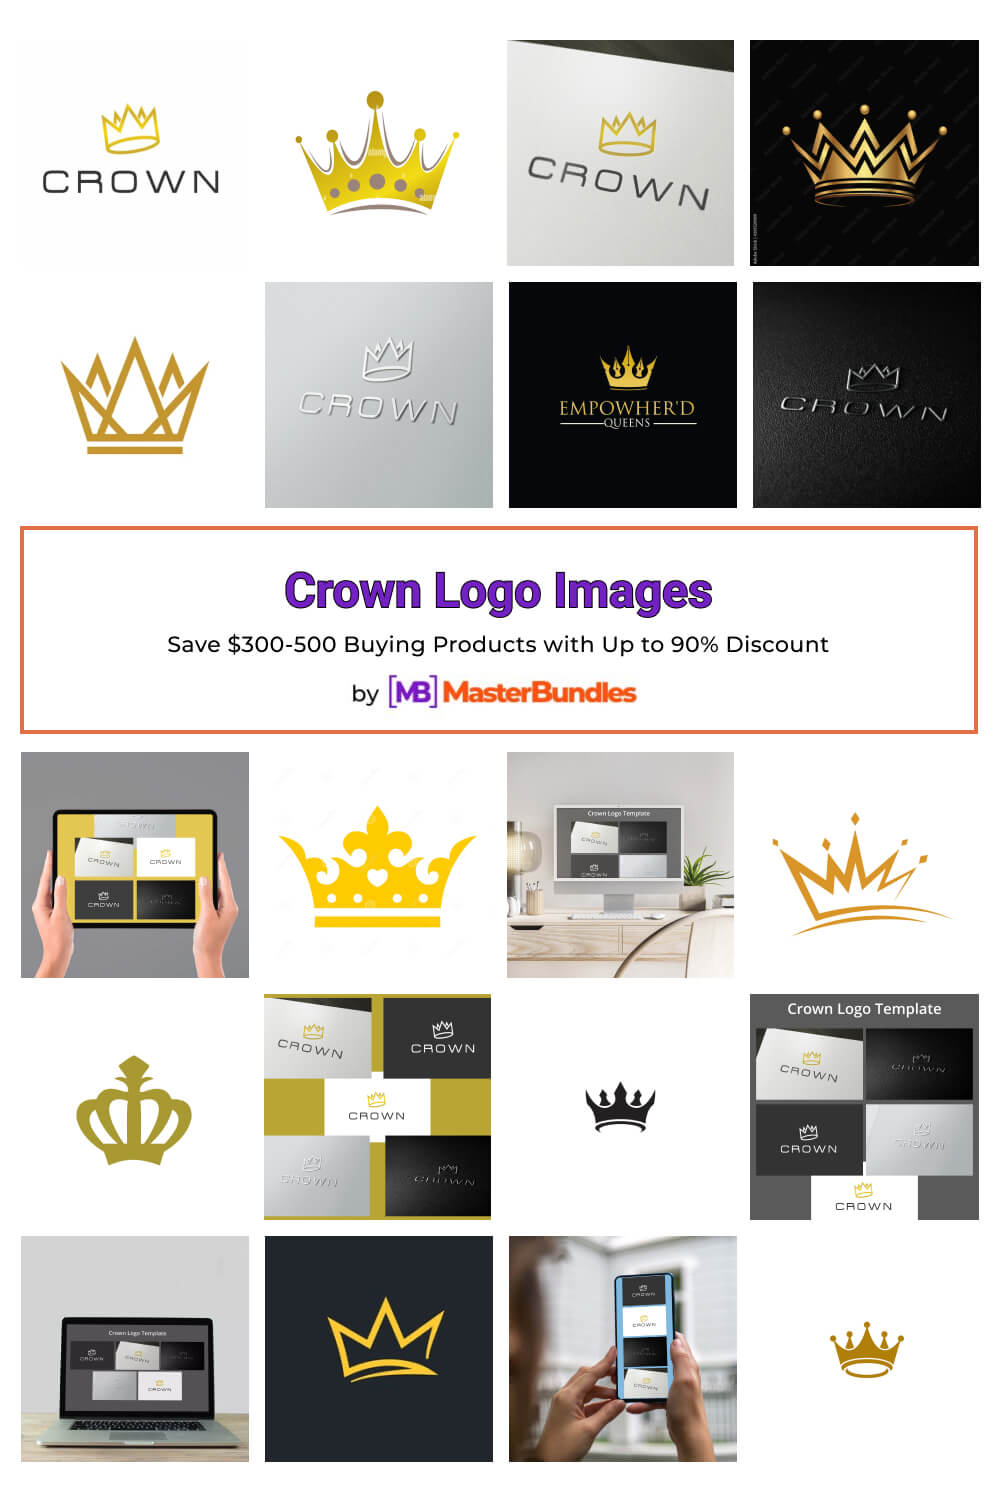 crown logo images pinterest image.